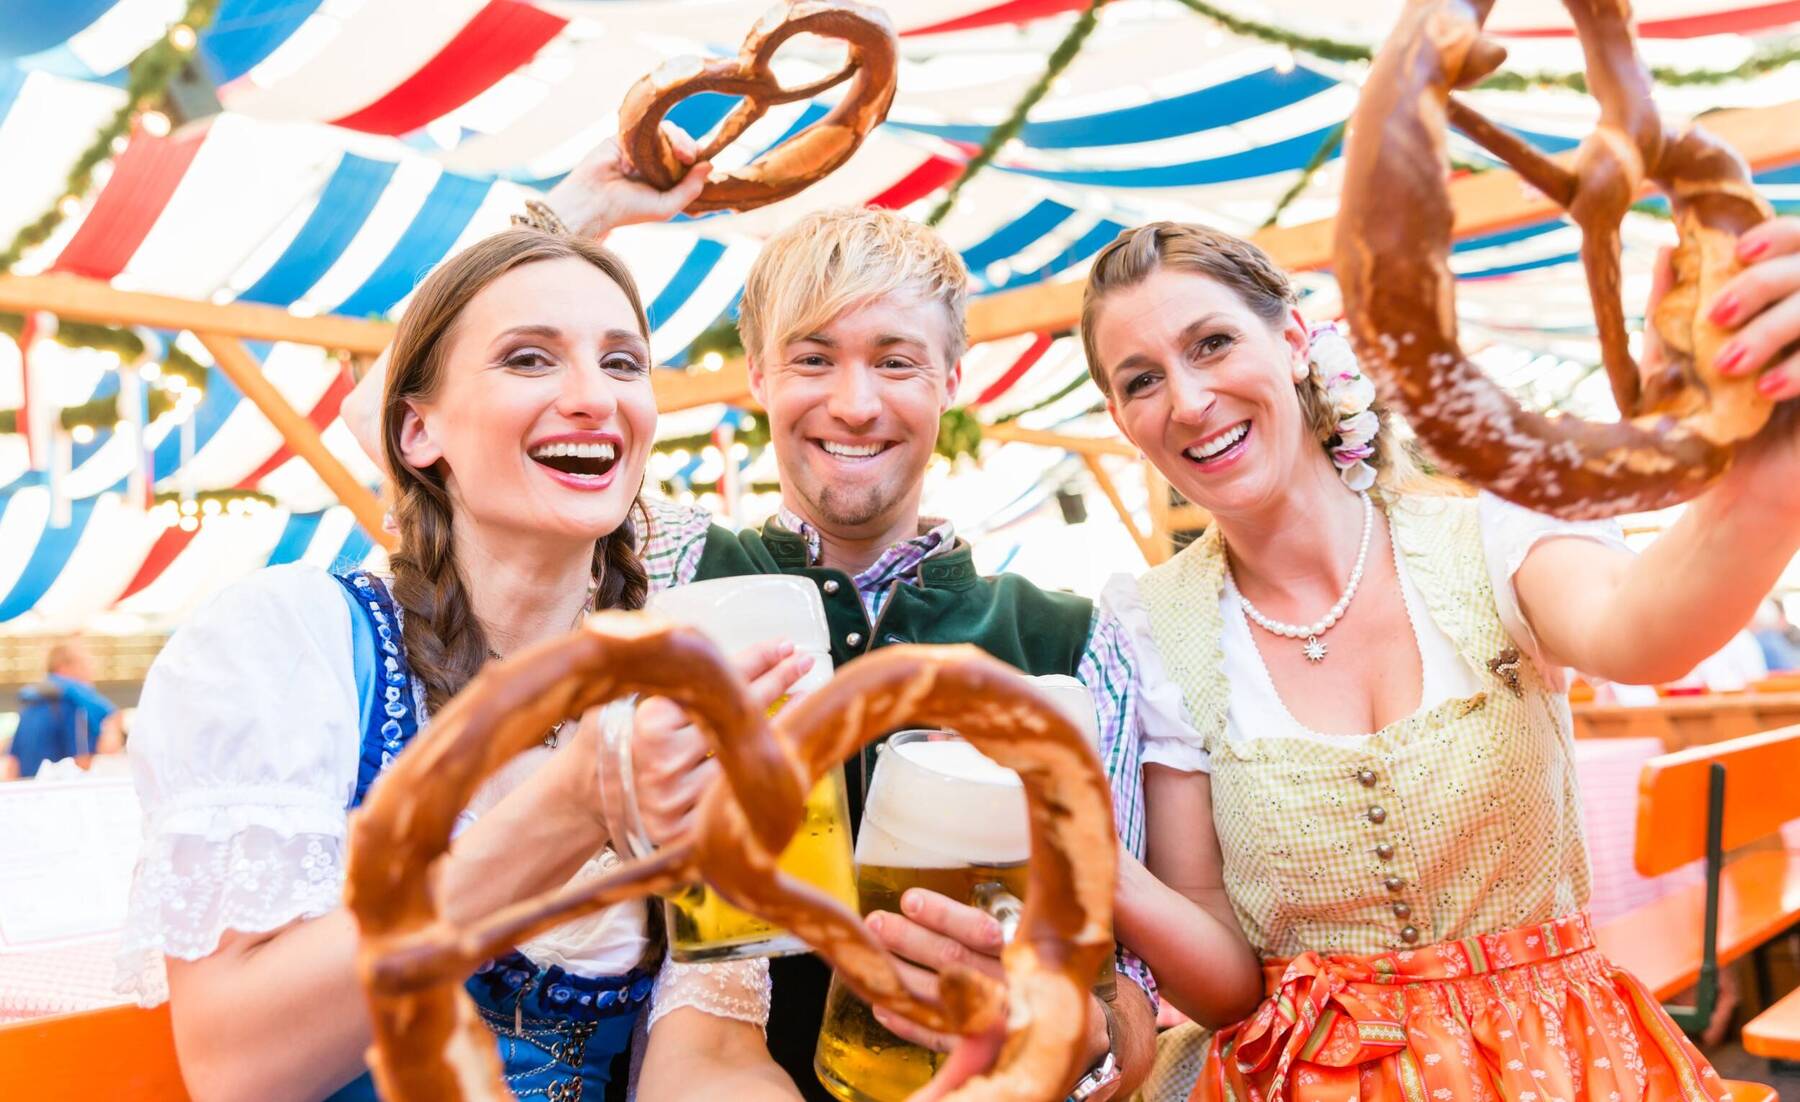 Four tips to enjoy Oktoberfest to the fullest